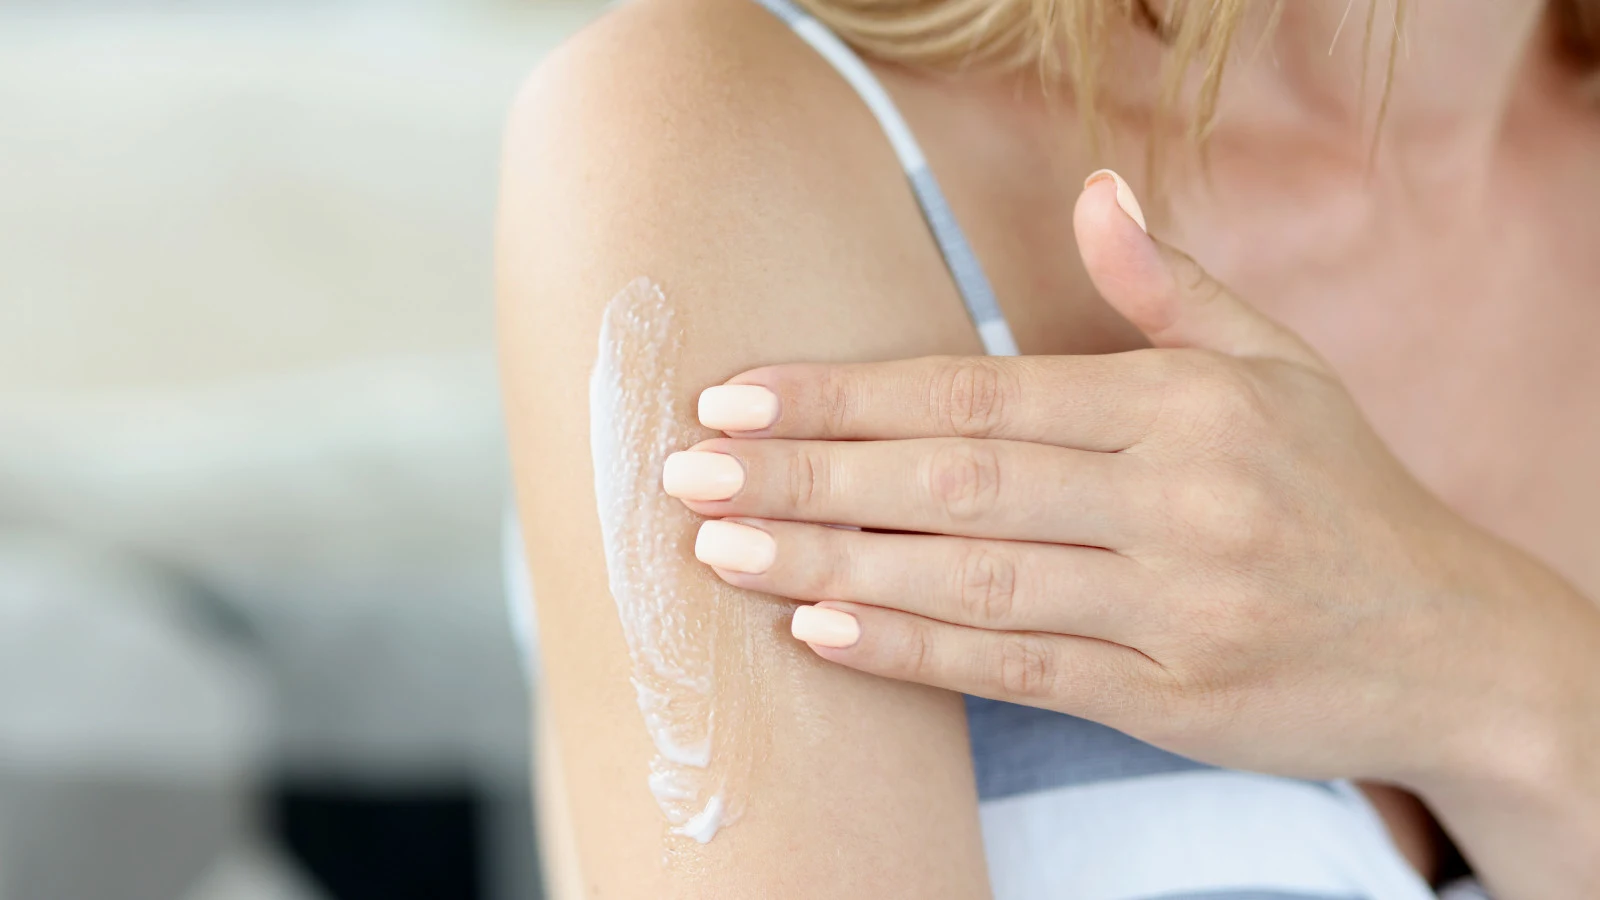 Applying cream on the arm